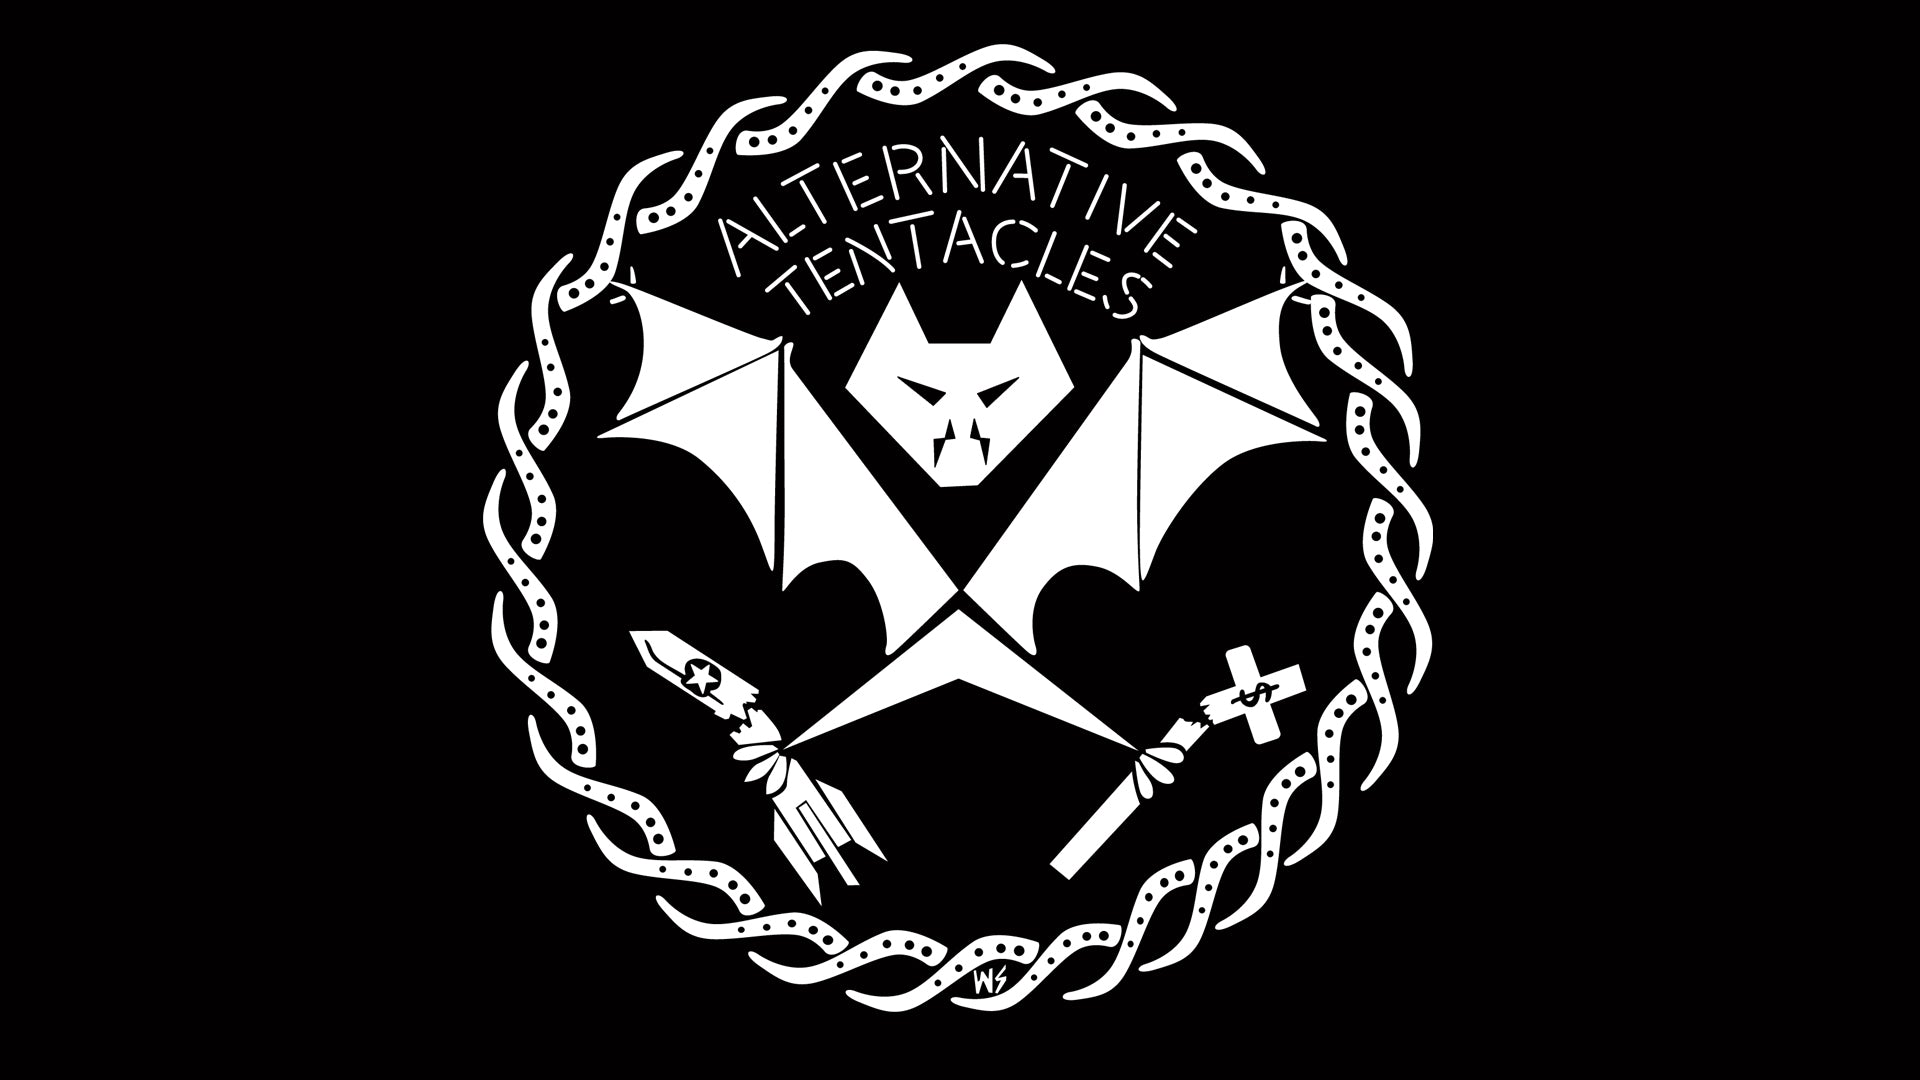 Welcome to the new alternativetentacles.com